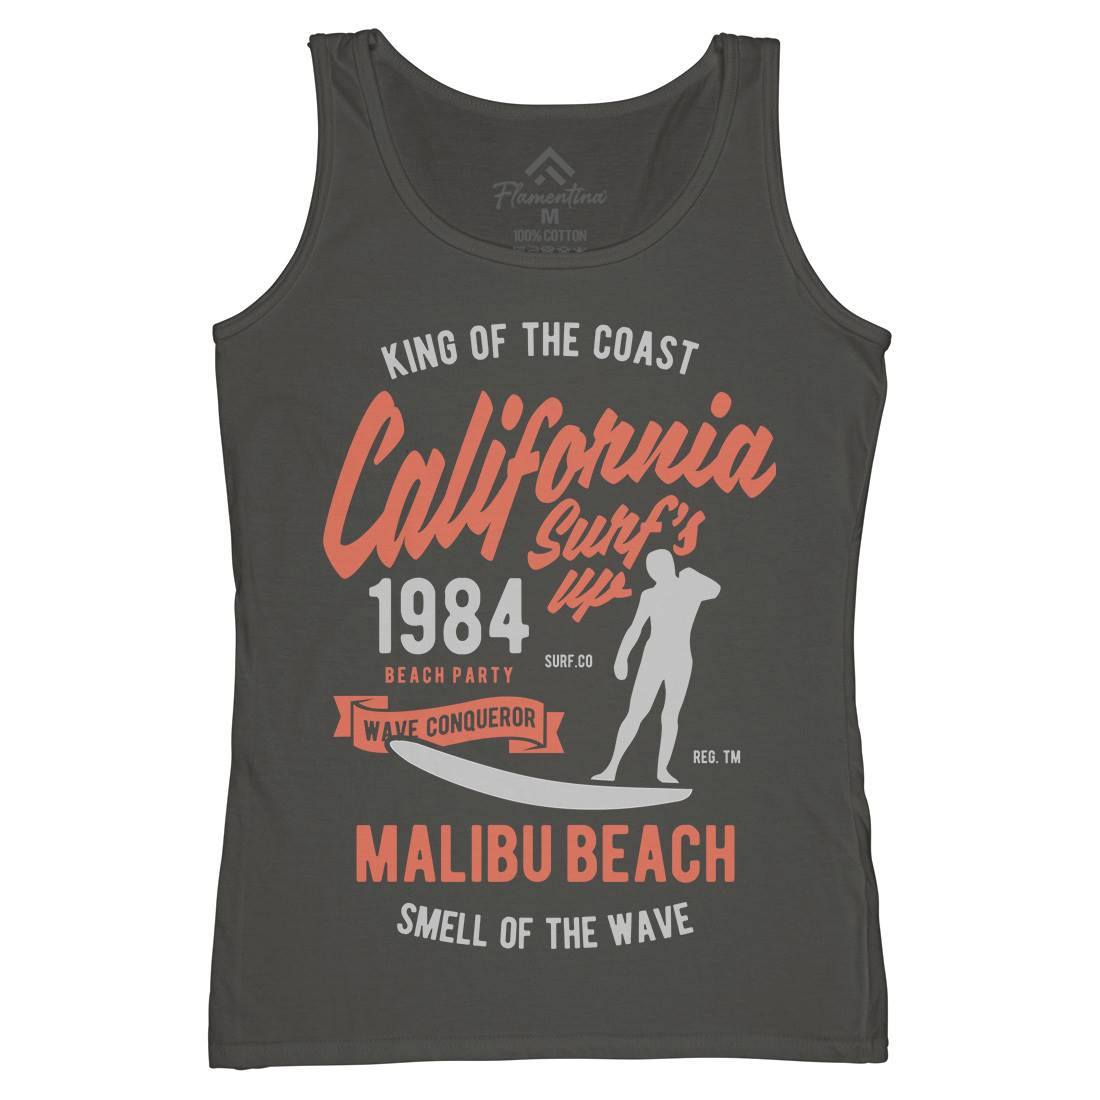 California Surfs Up Womens Organic Tank Top Vest Surf B389